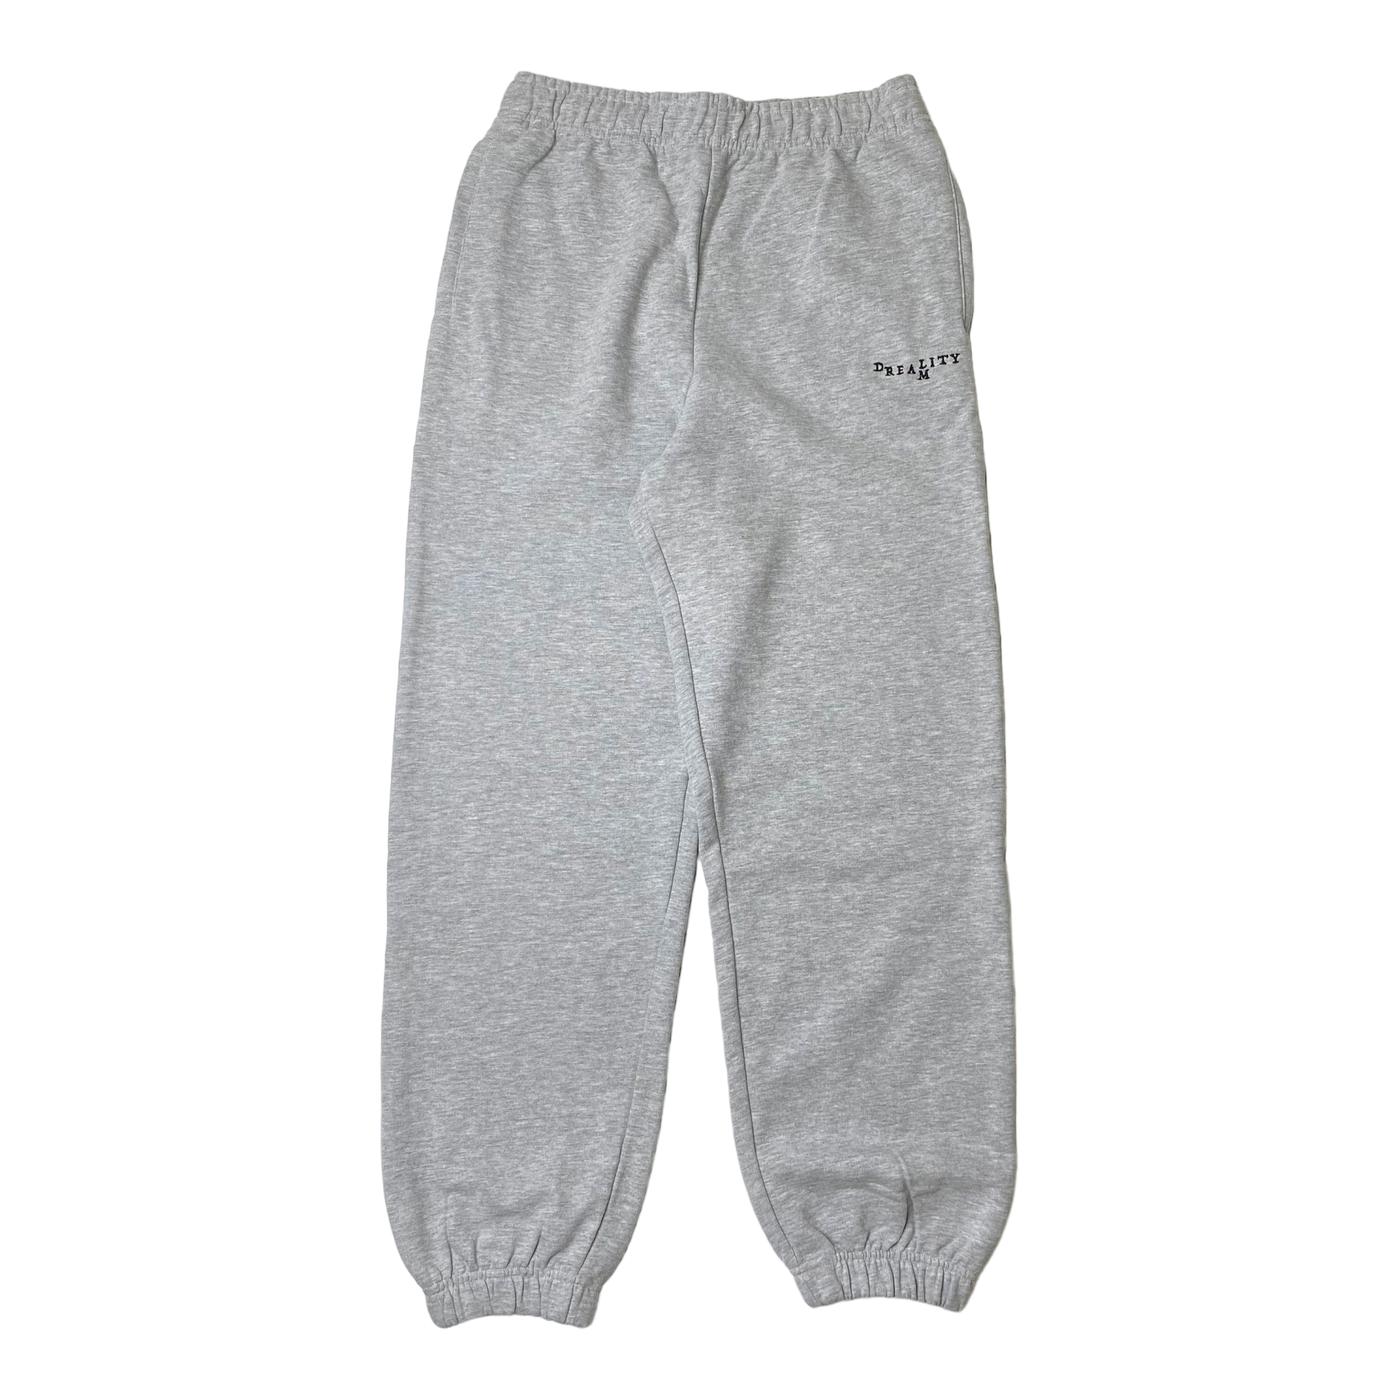 Molo sweatpants, marled grey | 164cm